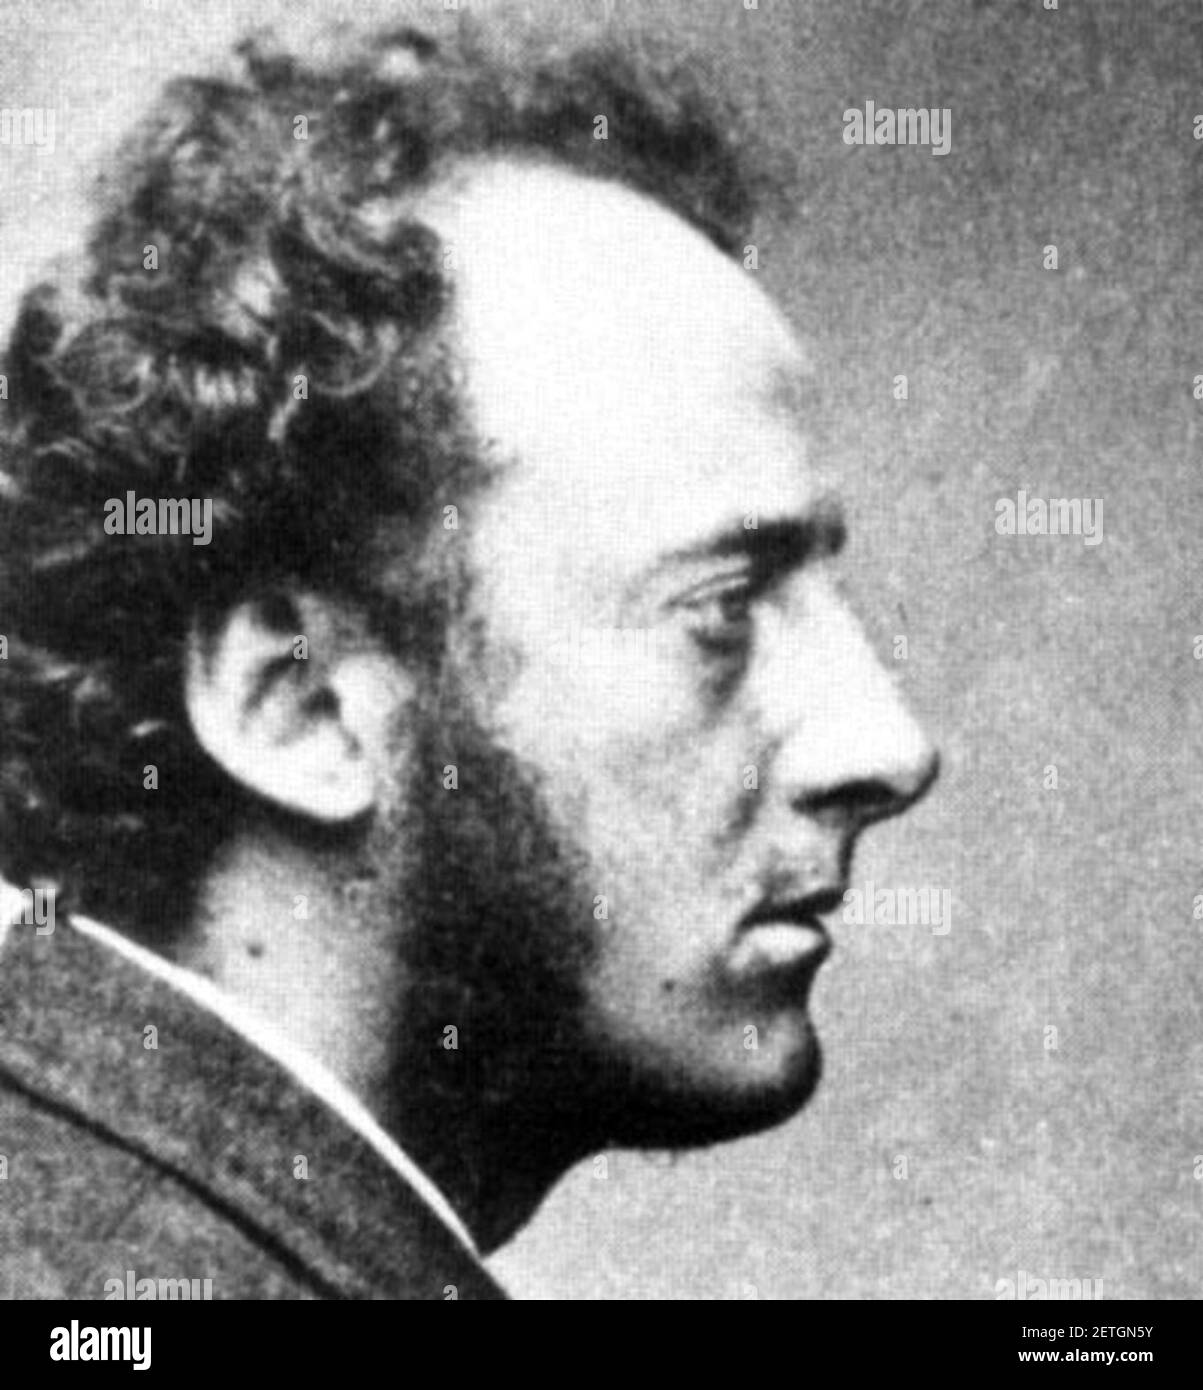 Photograph of John Everett Millais by Charles Dodgson. Stock Photo